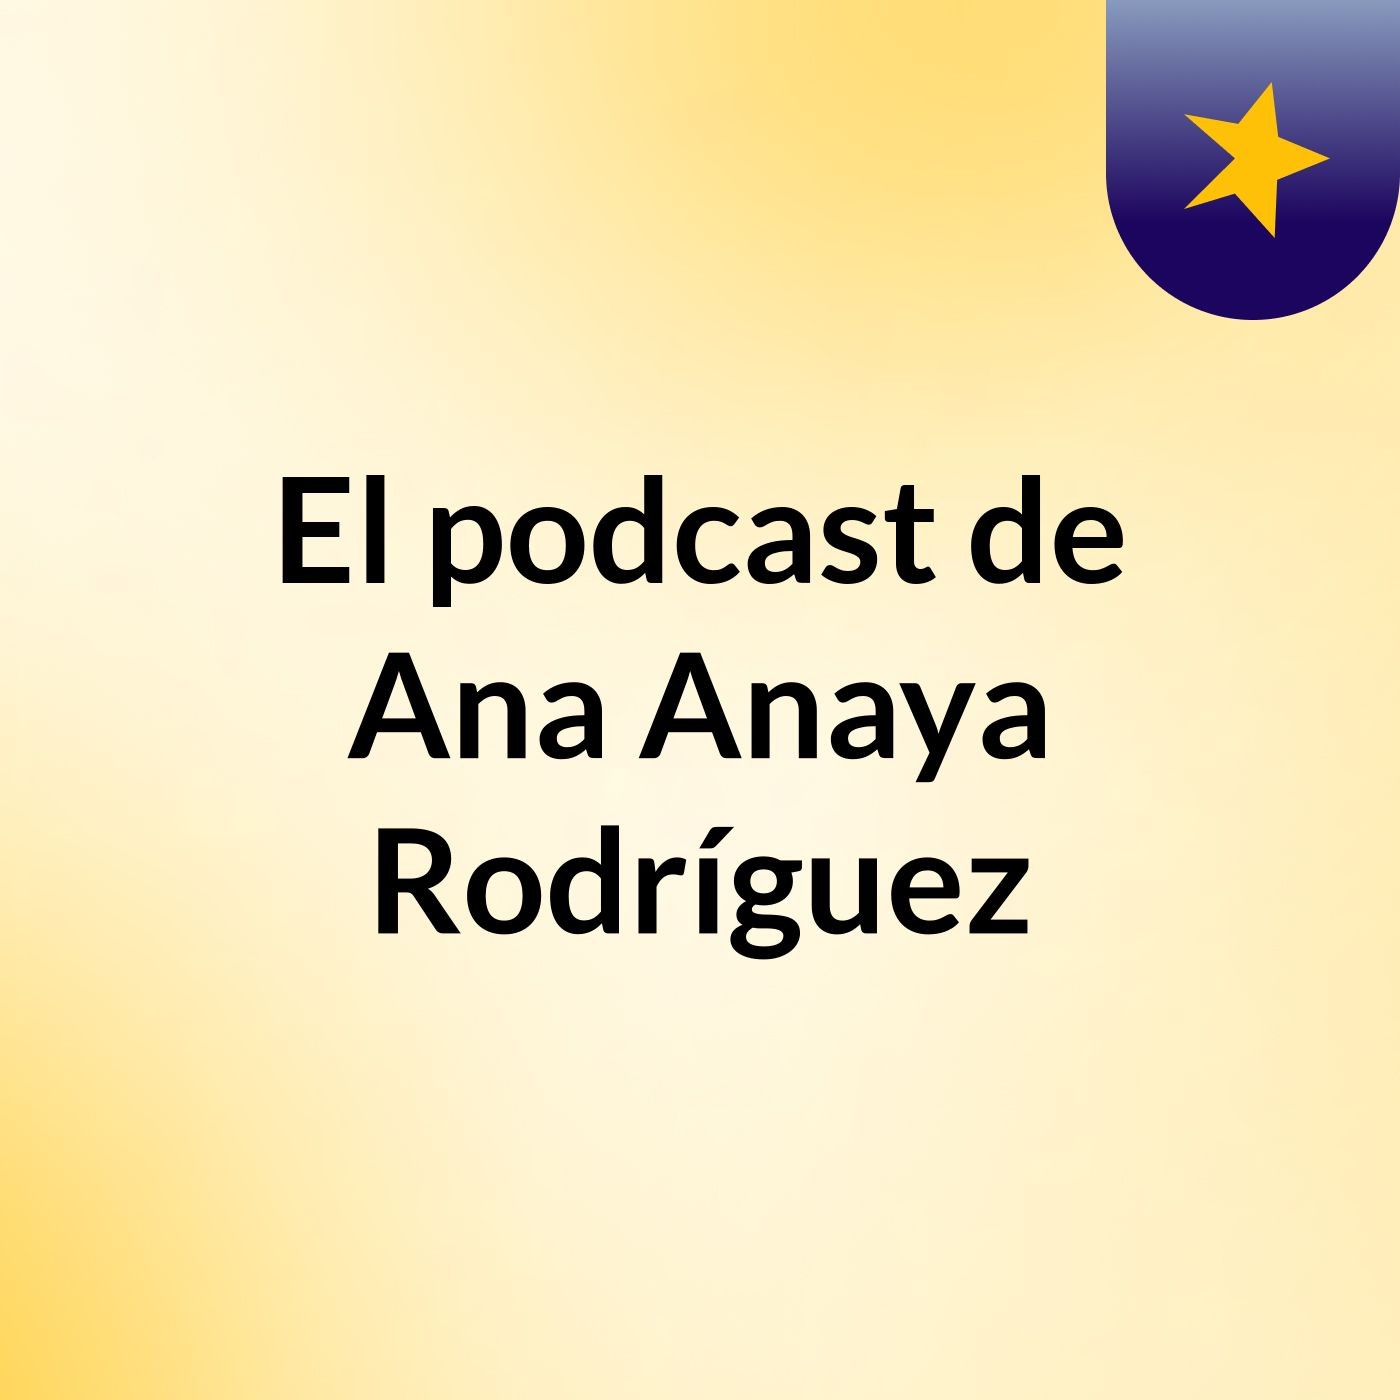 El podcast de Ana Anaya Rodríguez